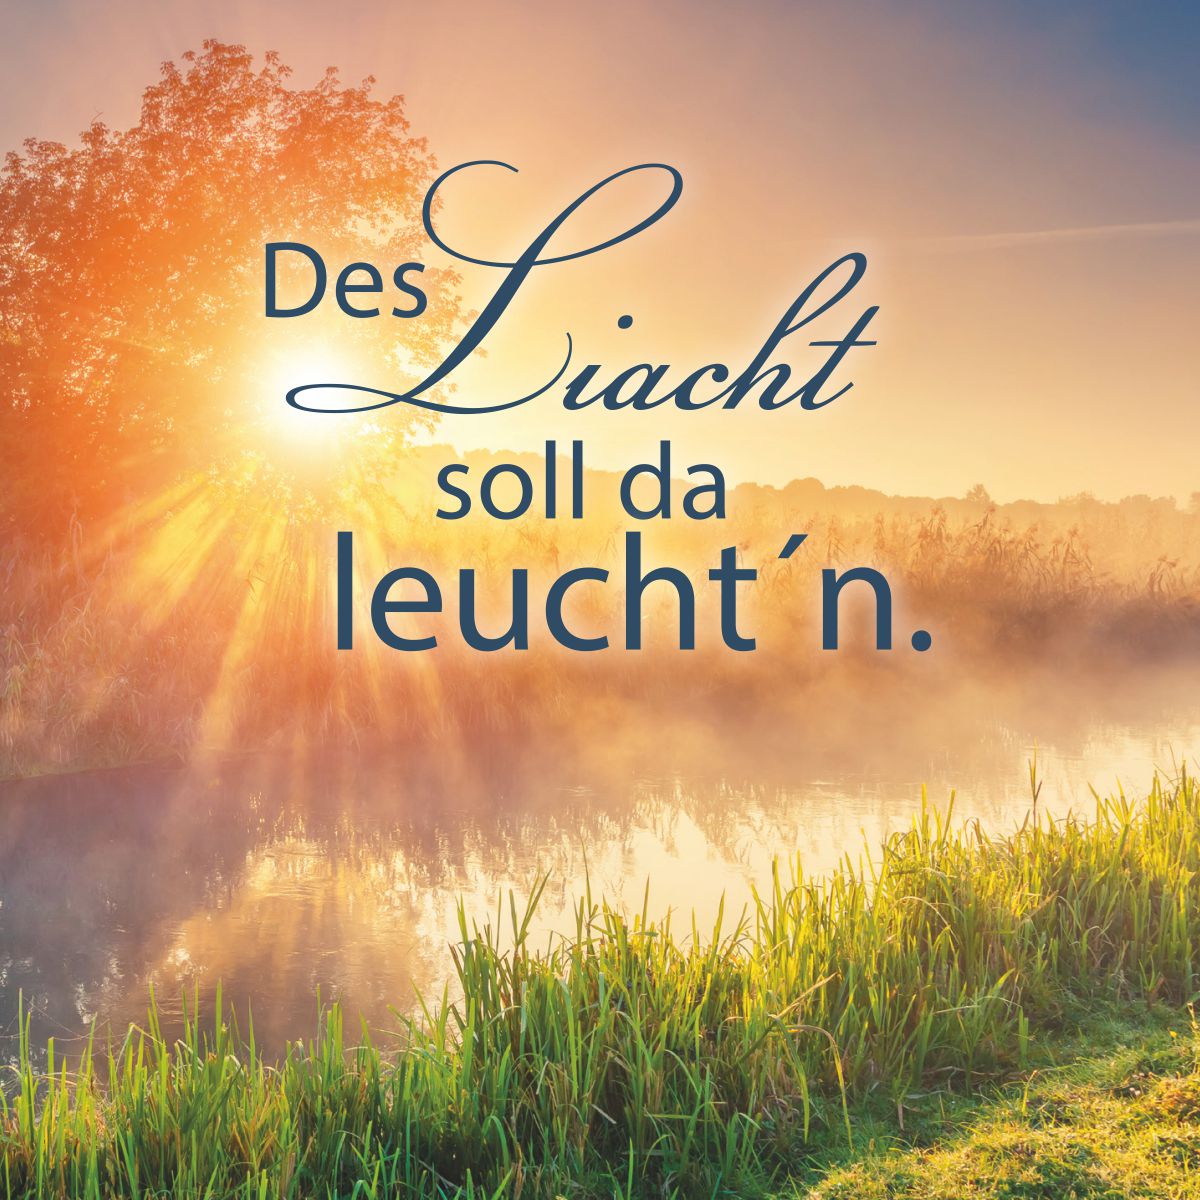 Motiv Sonnenuntergang hinter Baum und Bach mit Text "Des Liacht soll da leucht'n."